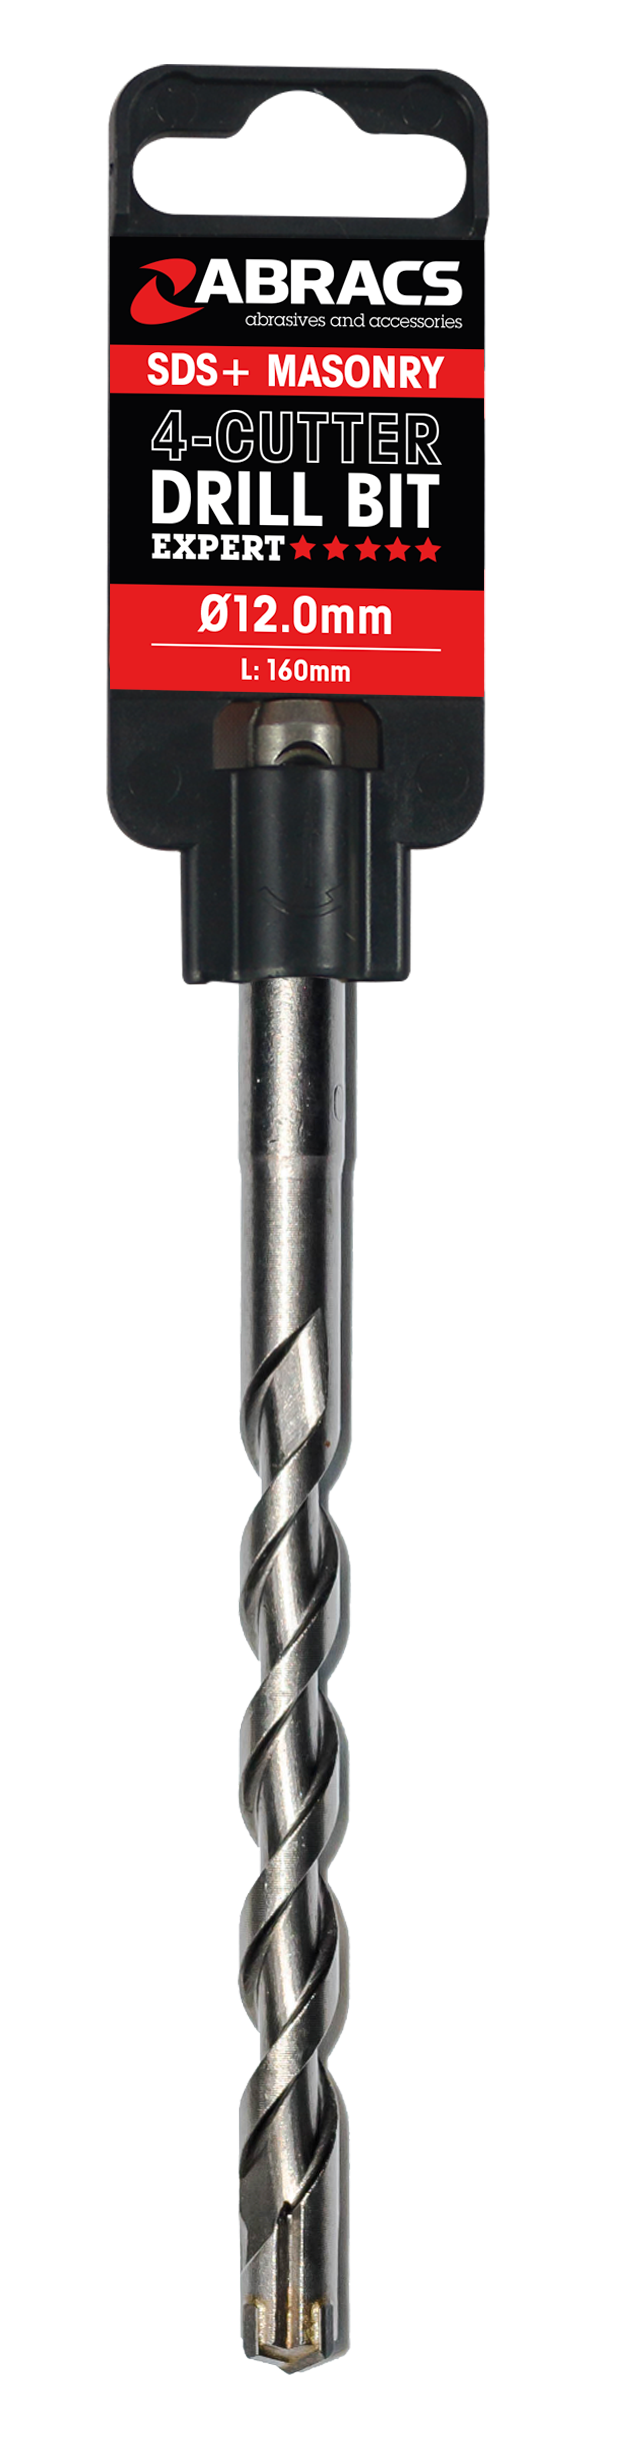 DBCX070310 7.0mm x 310mm SDS+ Masonry Drill Bit - 4 Cutter